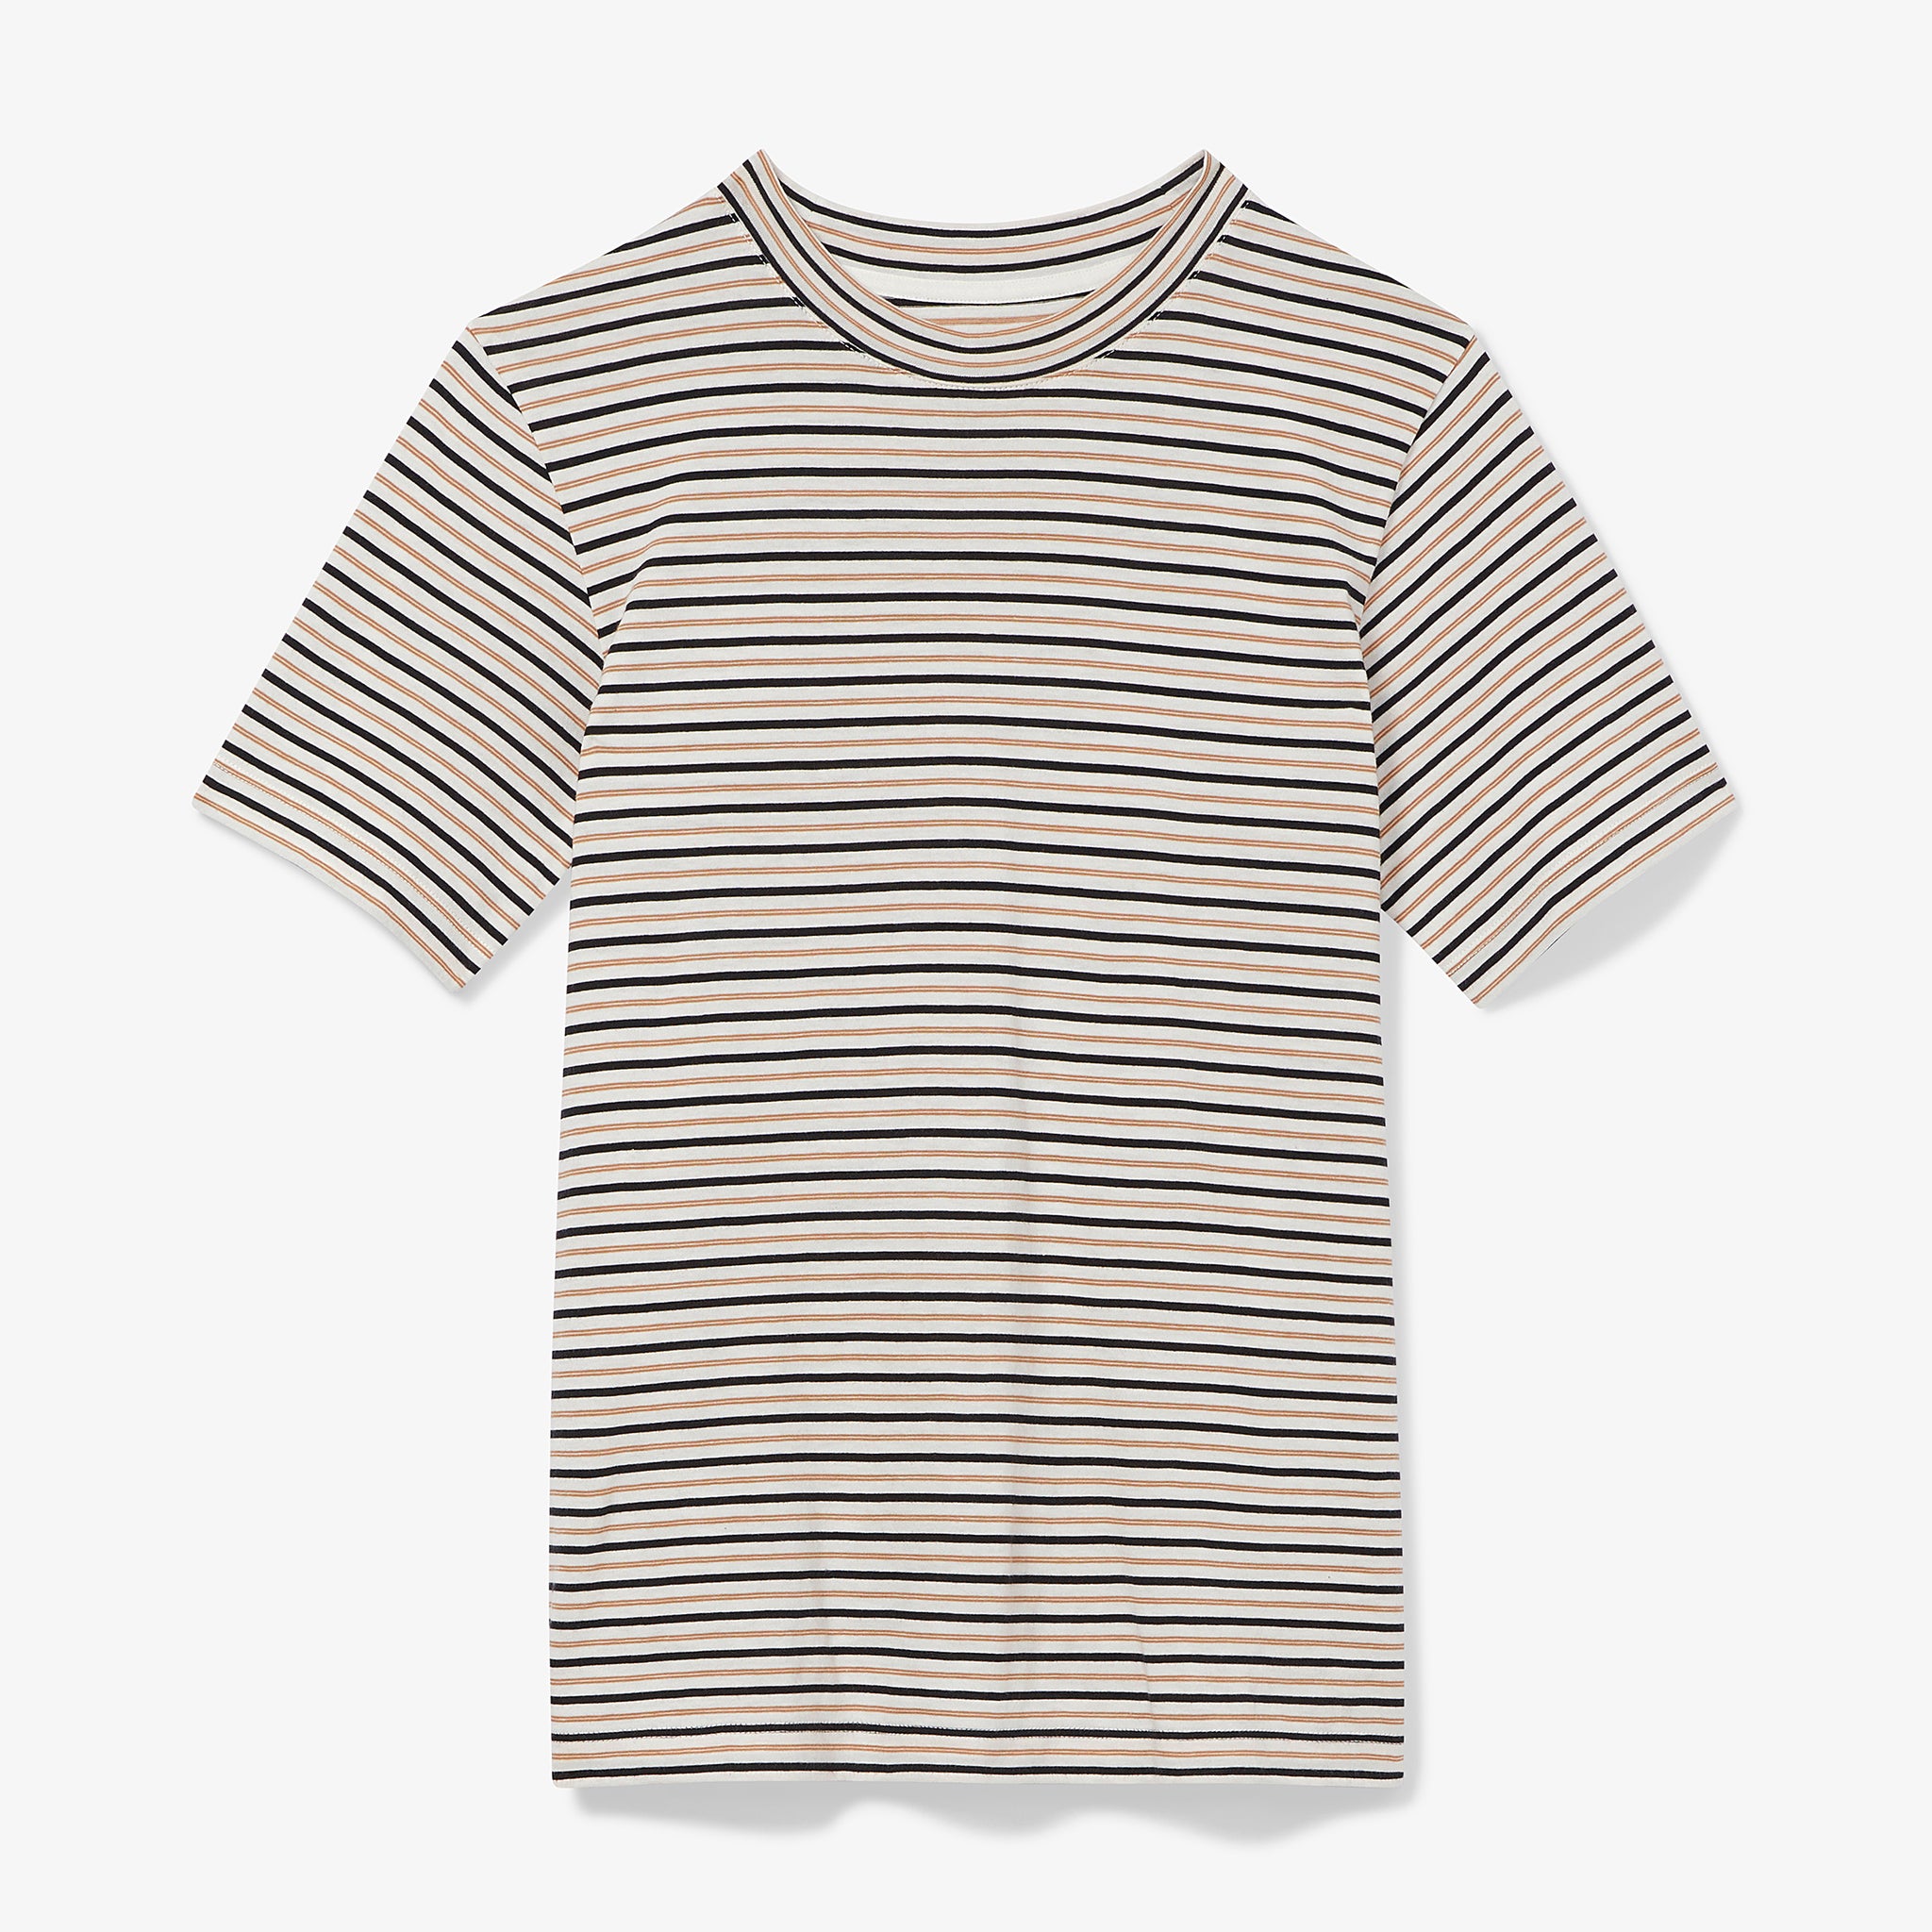 Packshot image of the Leslie T-Shirt - Thin Striped Pima Cotton in Tan / Black